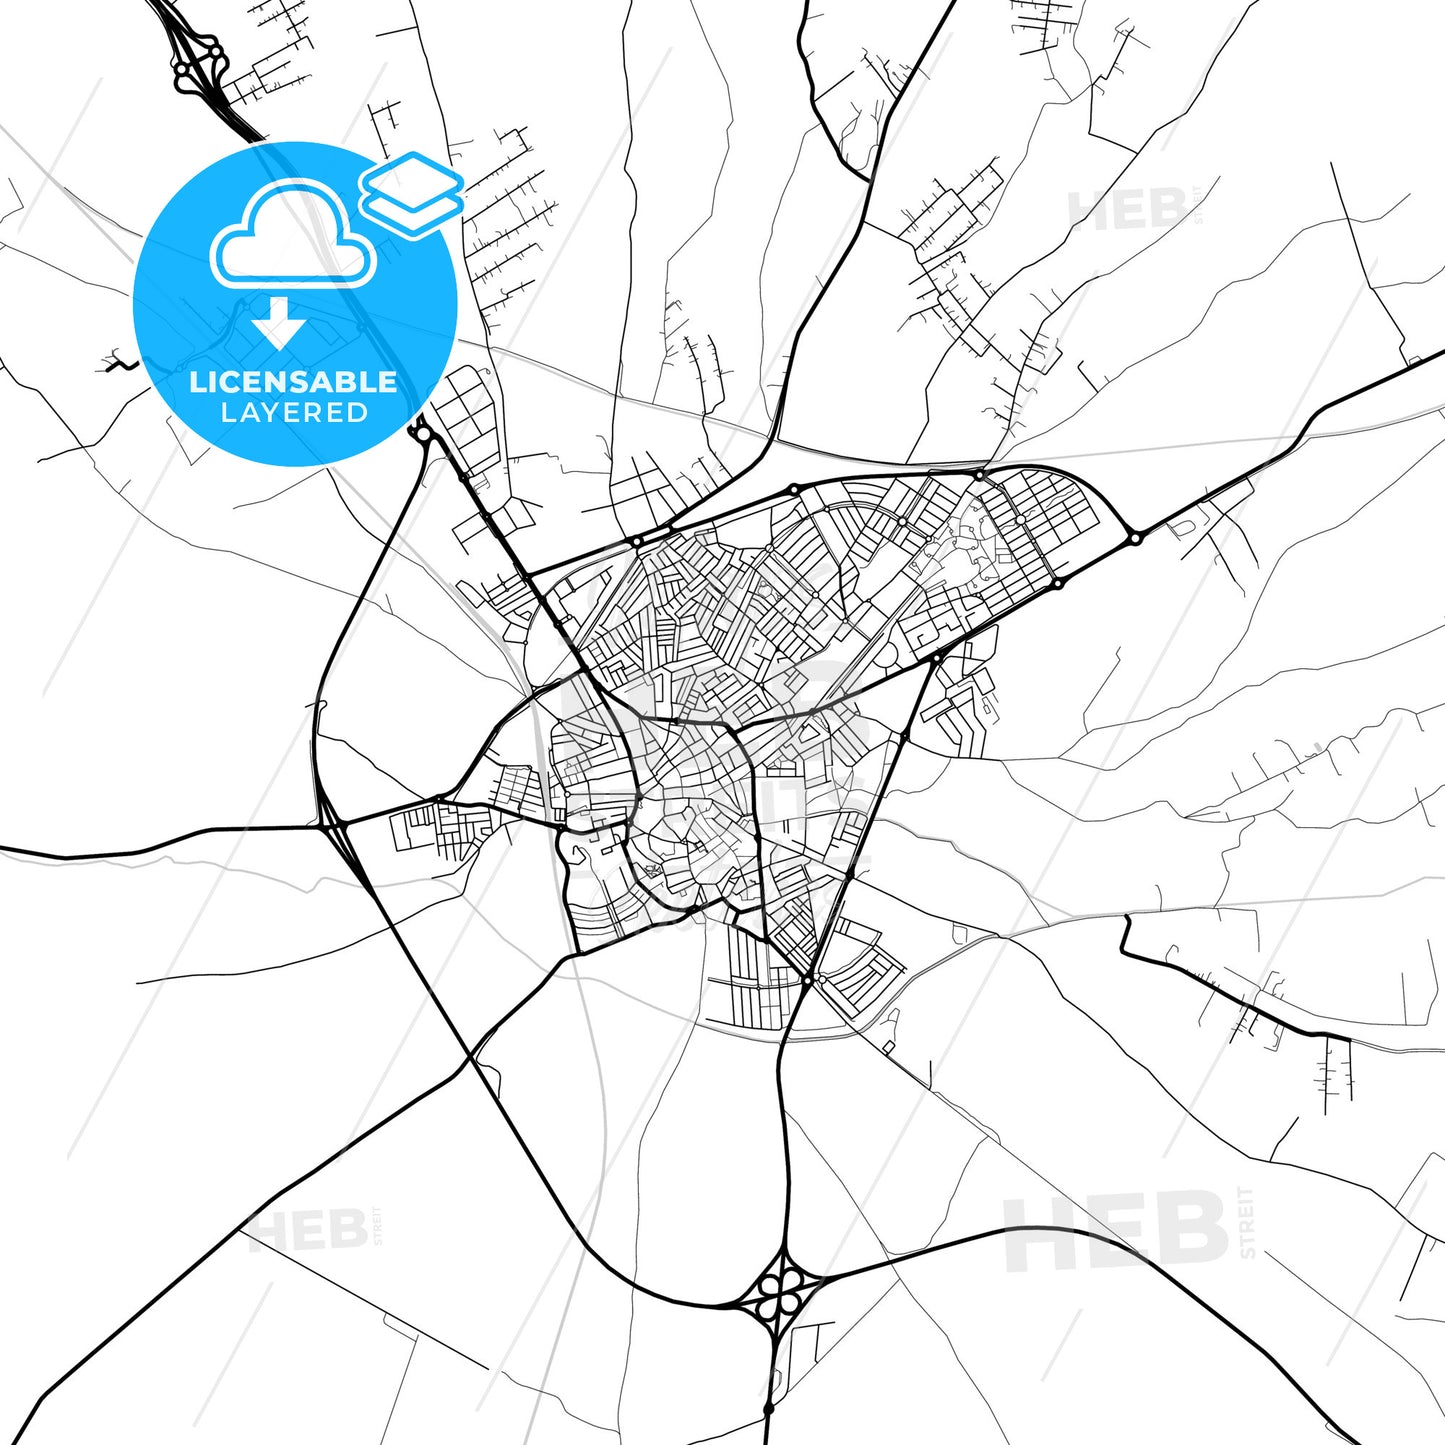 Layered PDF map of Utrera, Seville, Spain